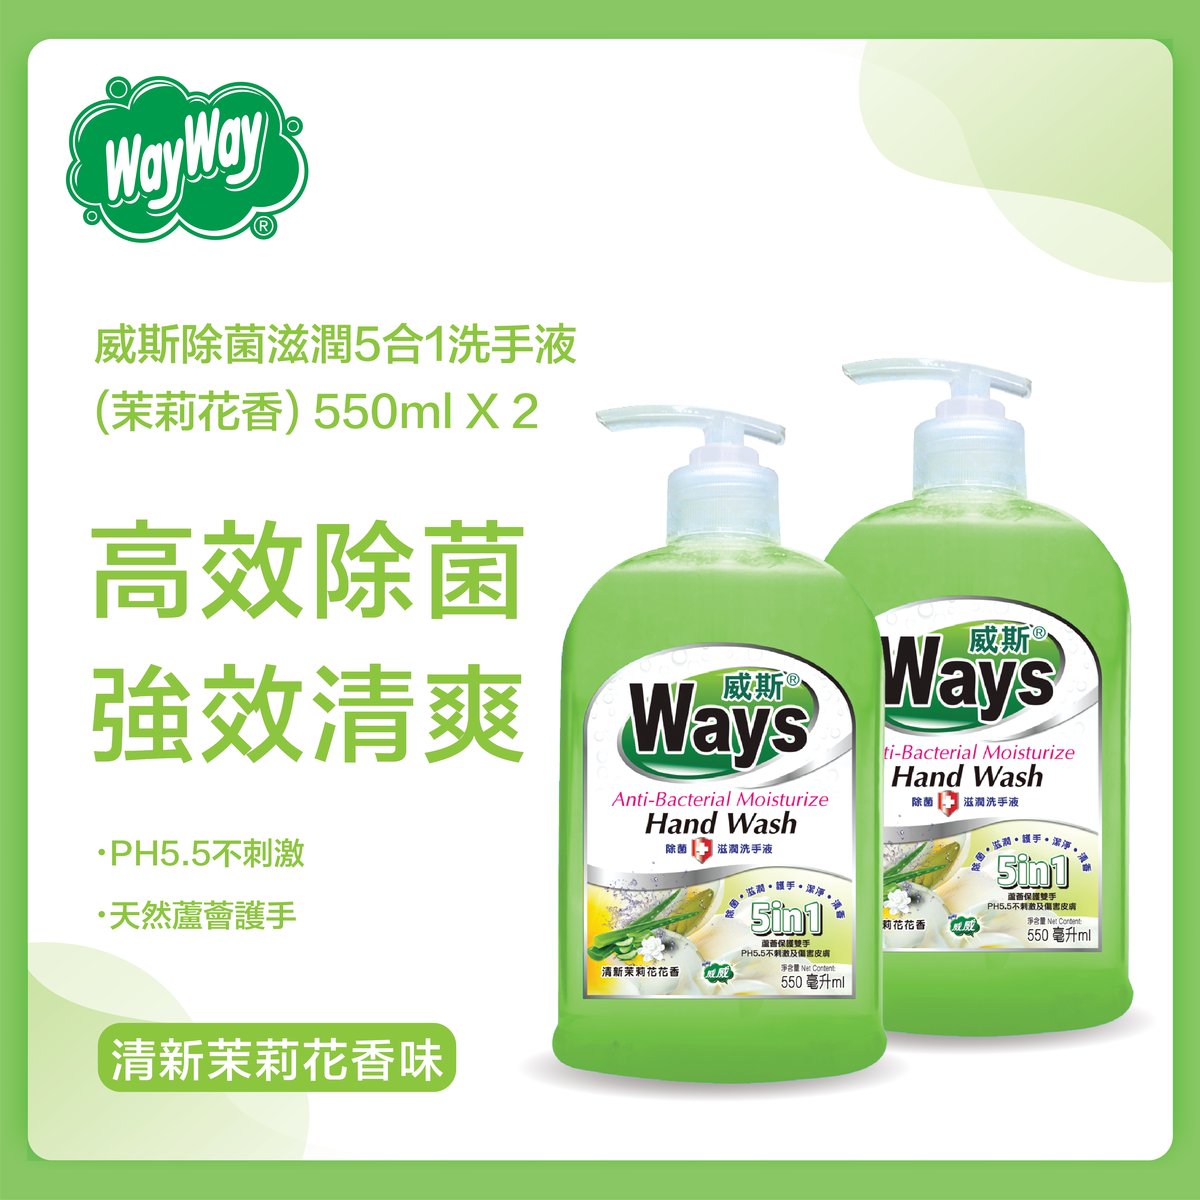 5in1 Anti-bacterial Moisturizing Liquid Foam Soap